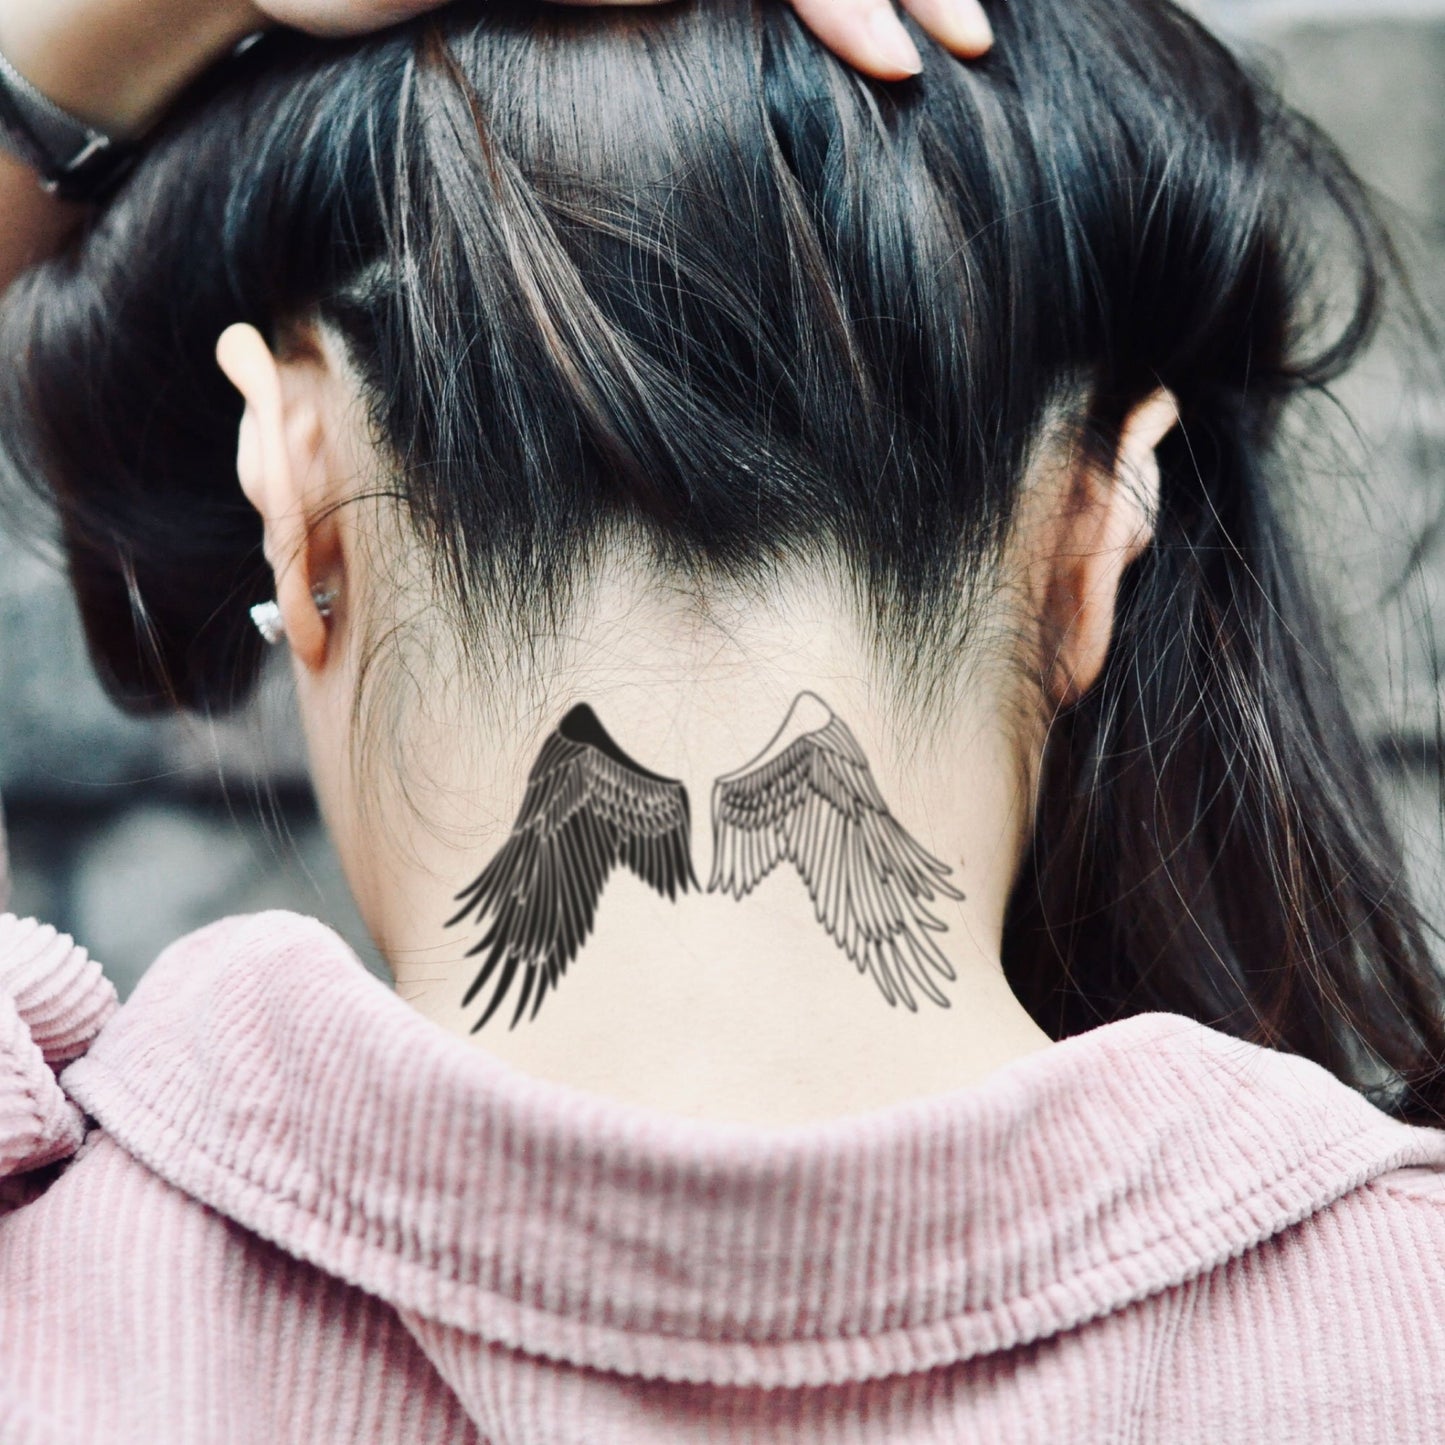 fake medium angel and demon light and dark devil wings wingspan good vs evil illustrative temporary tattoo sticker design idea on neck